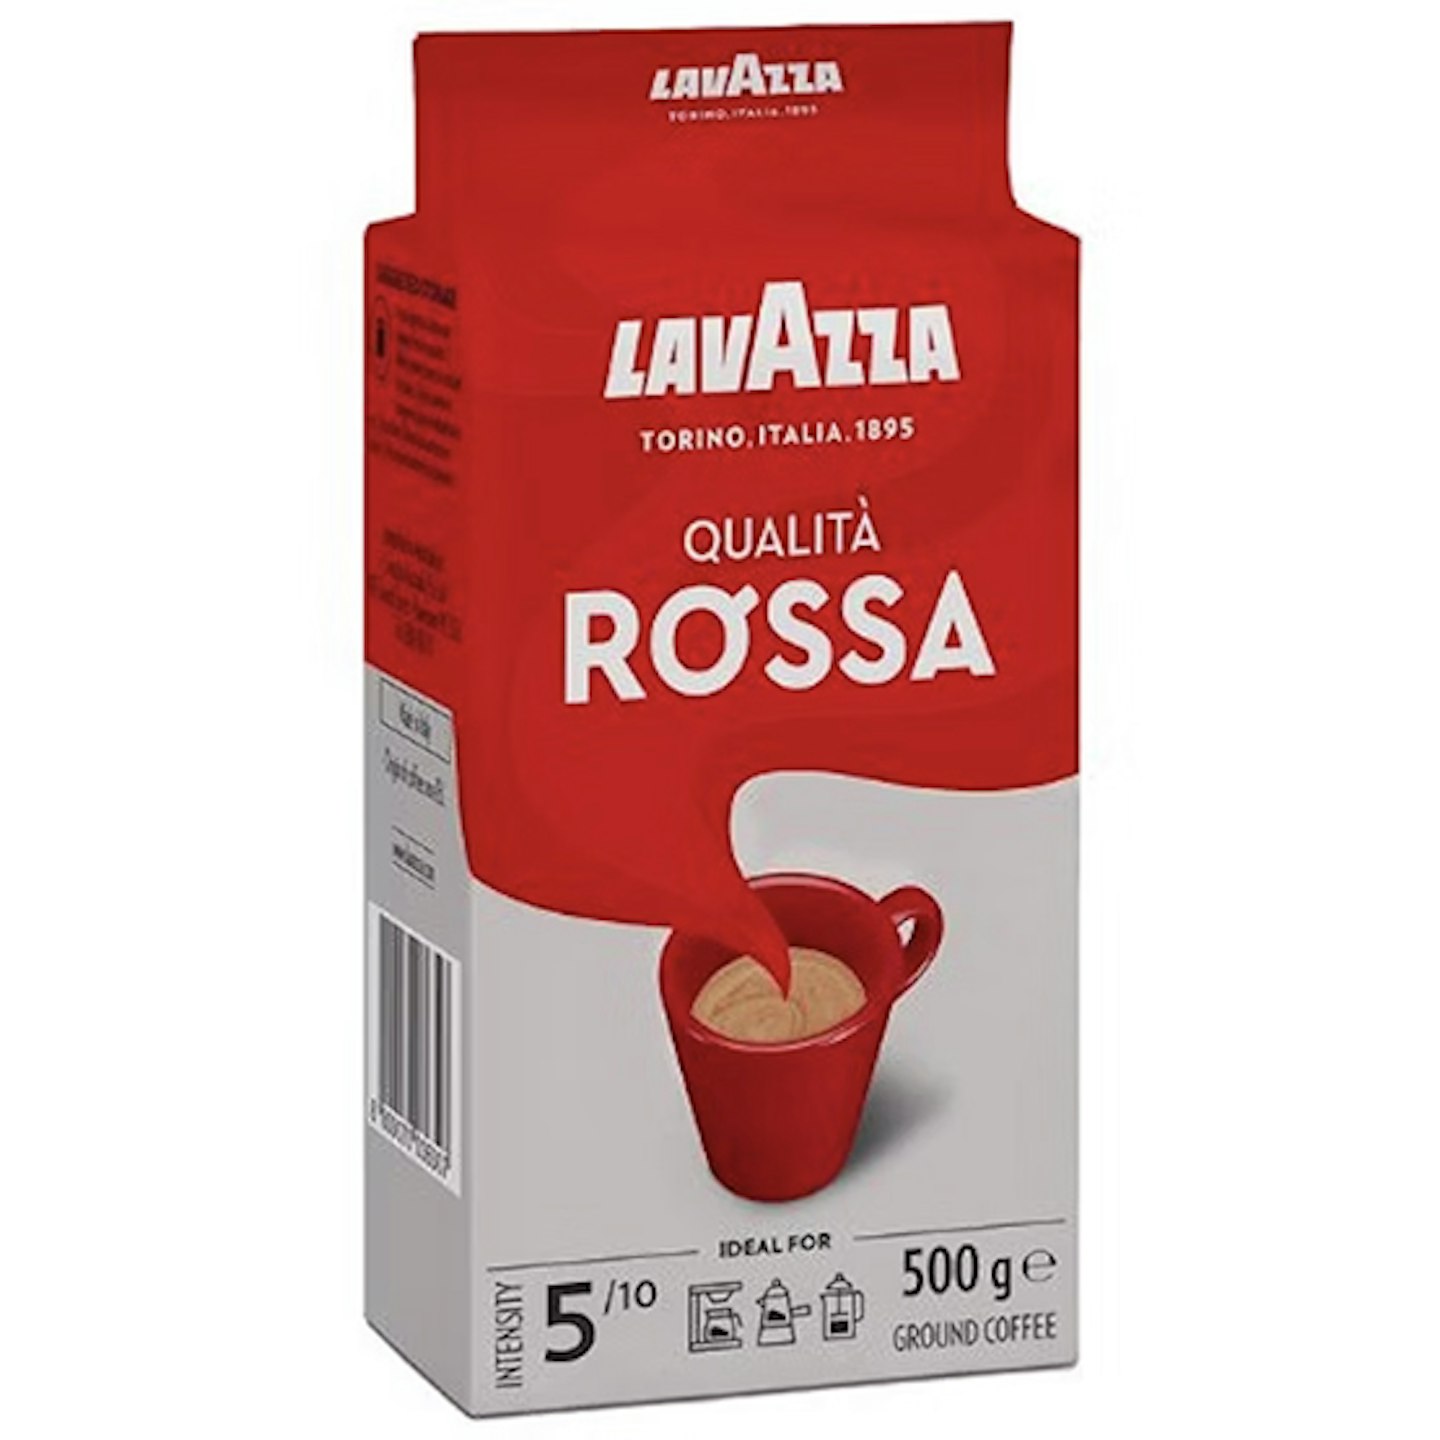 Lavazza-Qualita-Rossa-Ground-Coffee copy